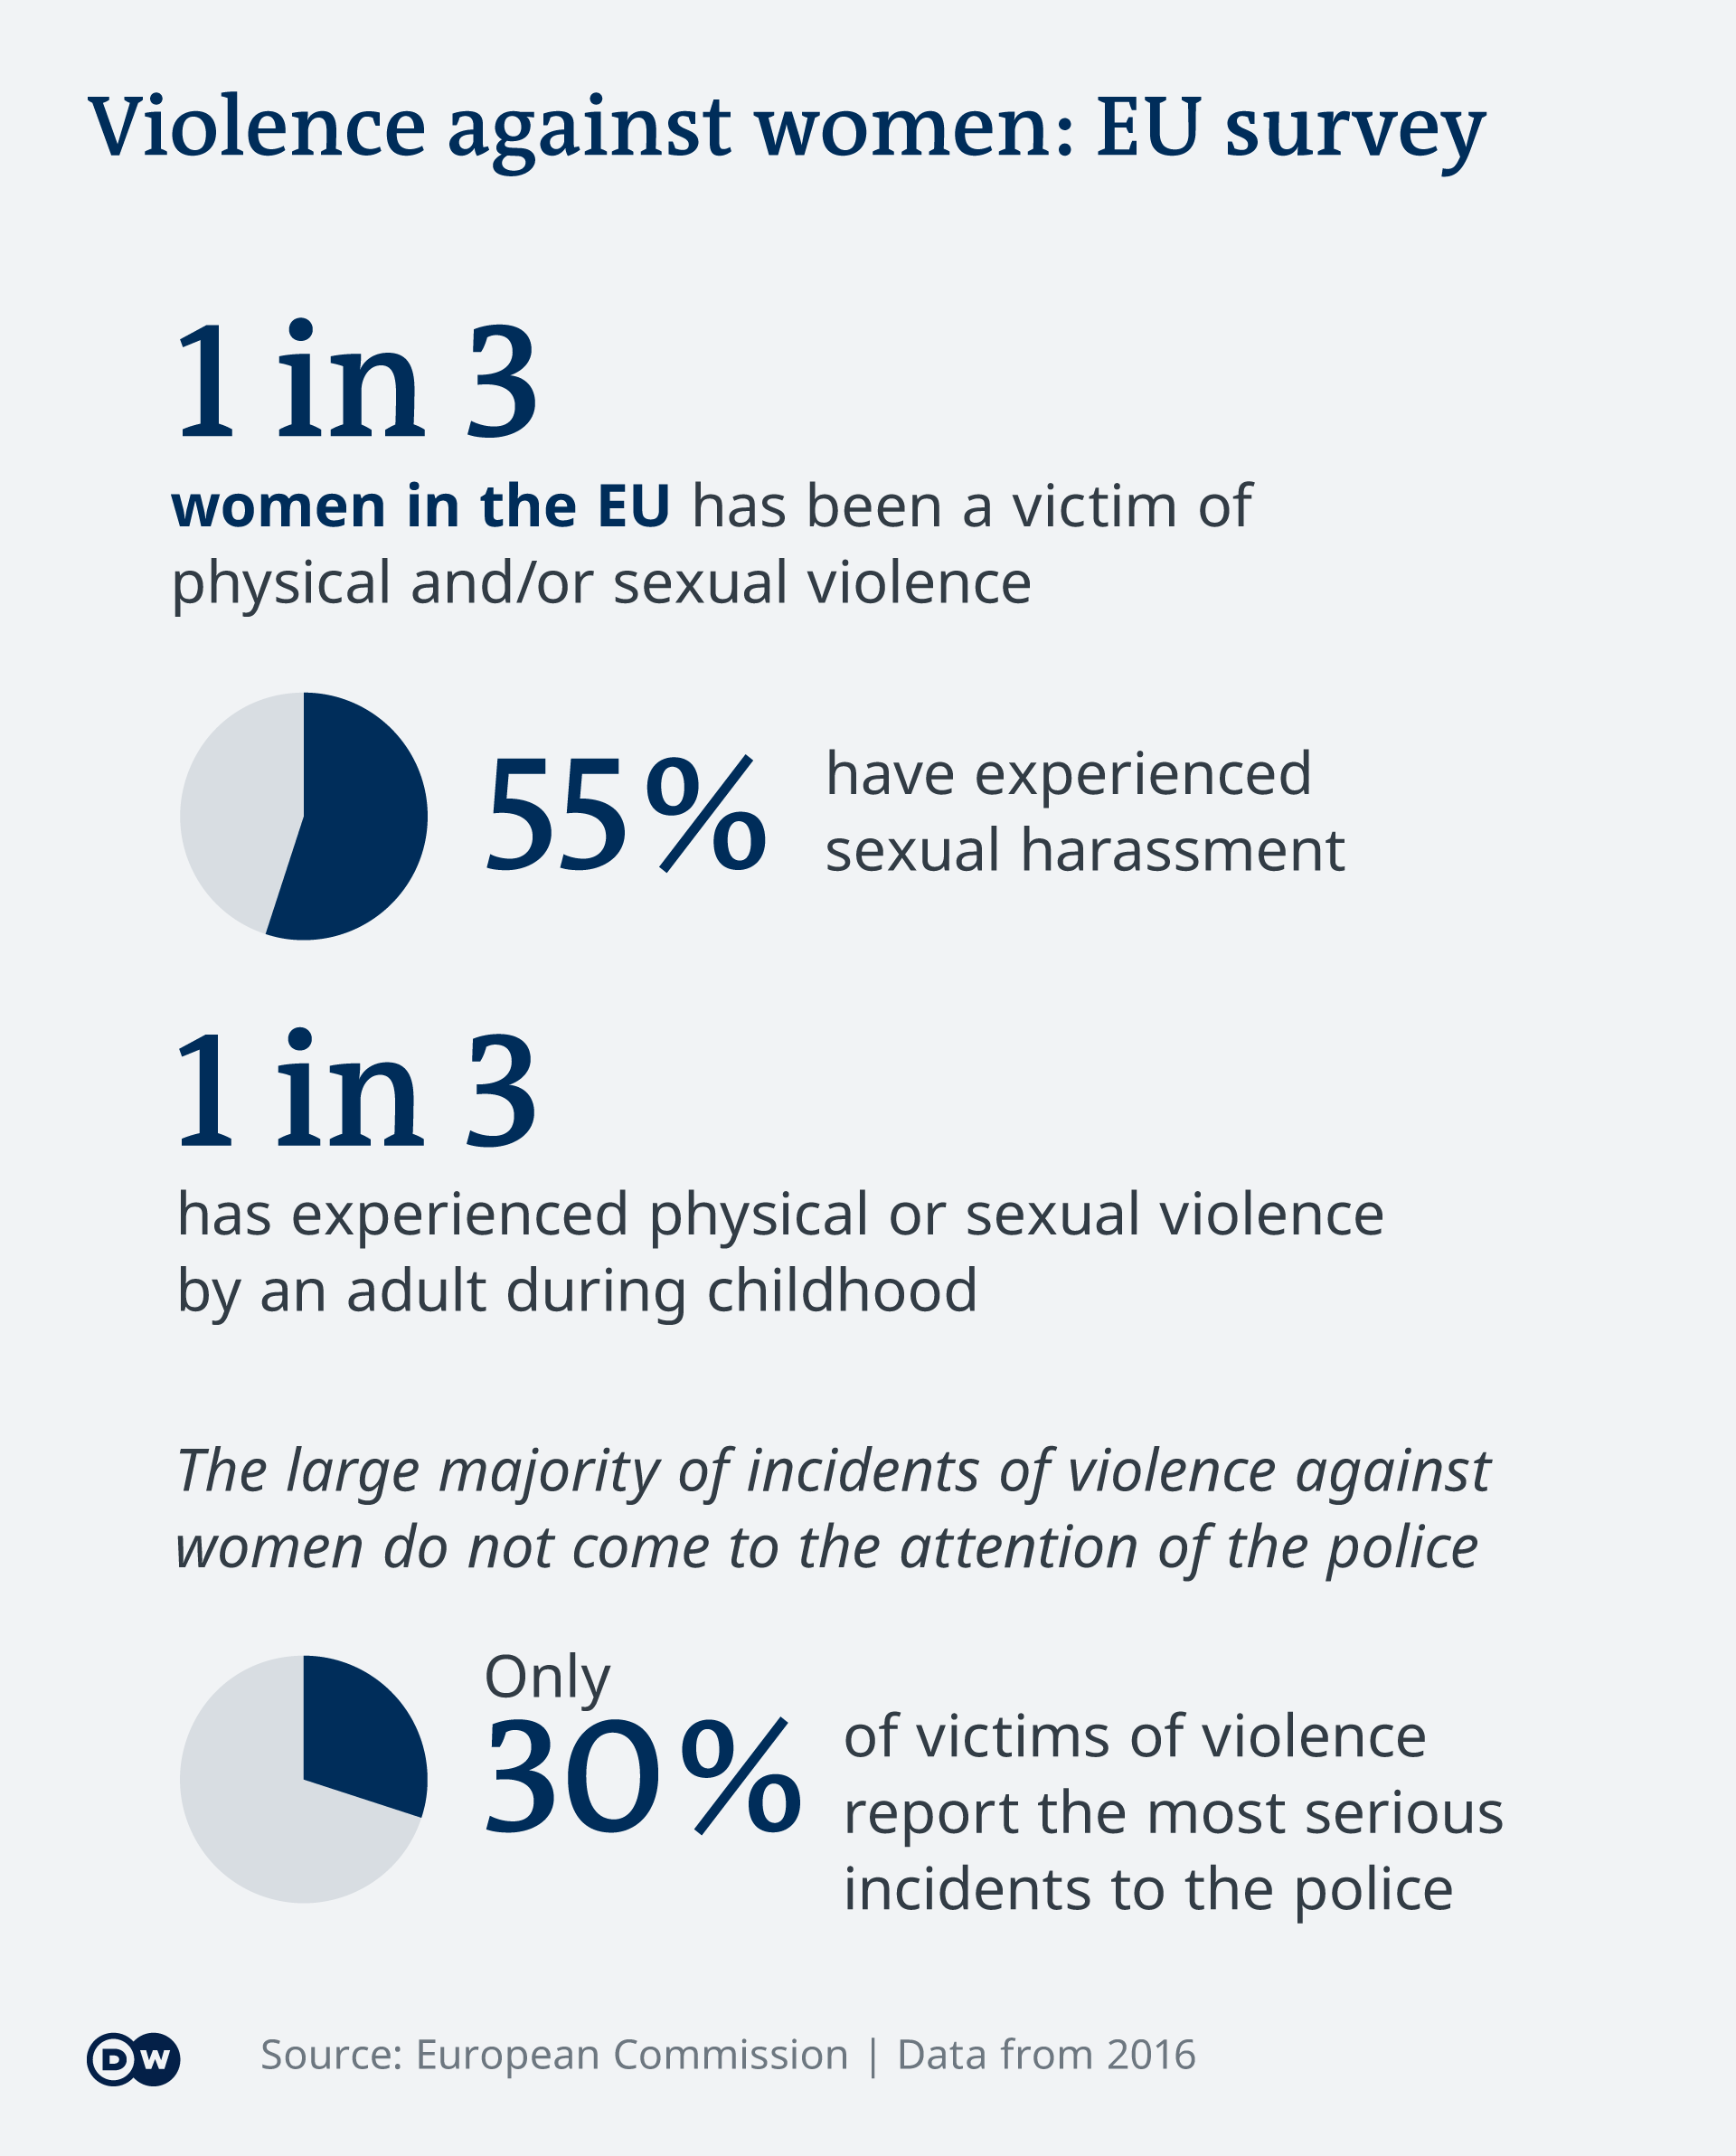 statistics on violence against women in EU